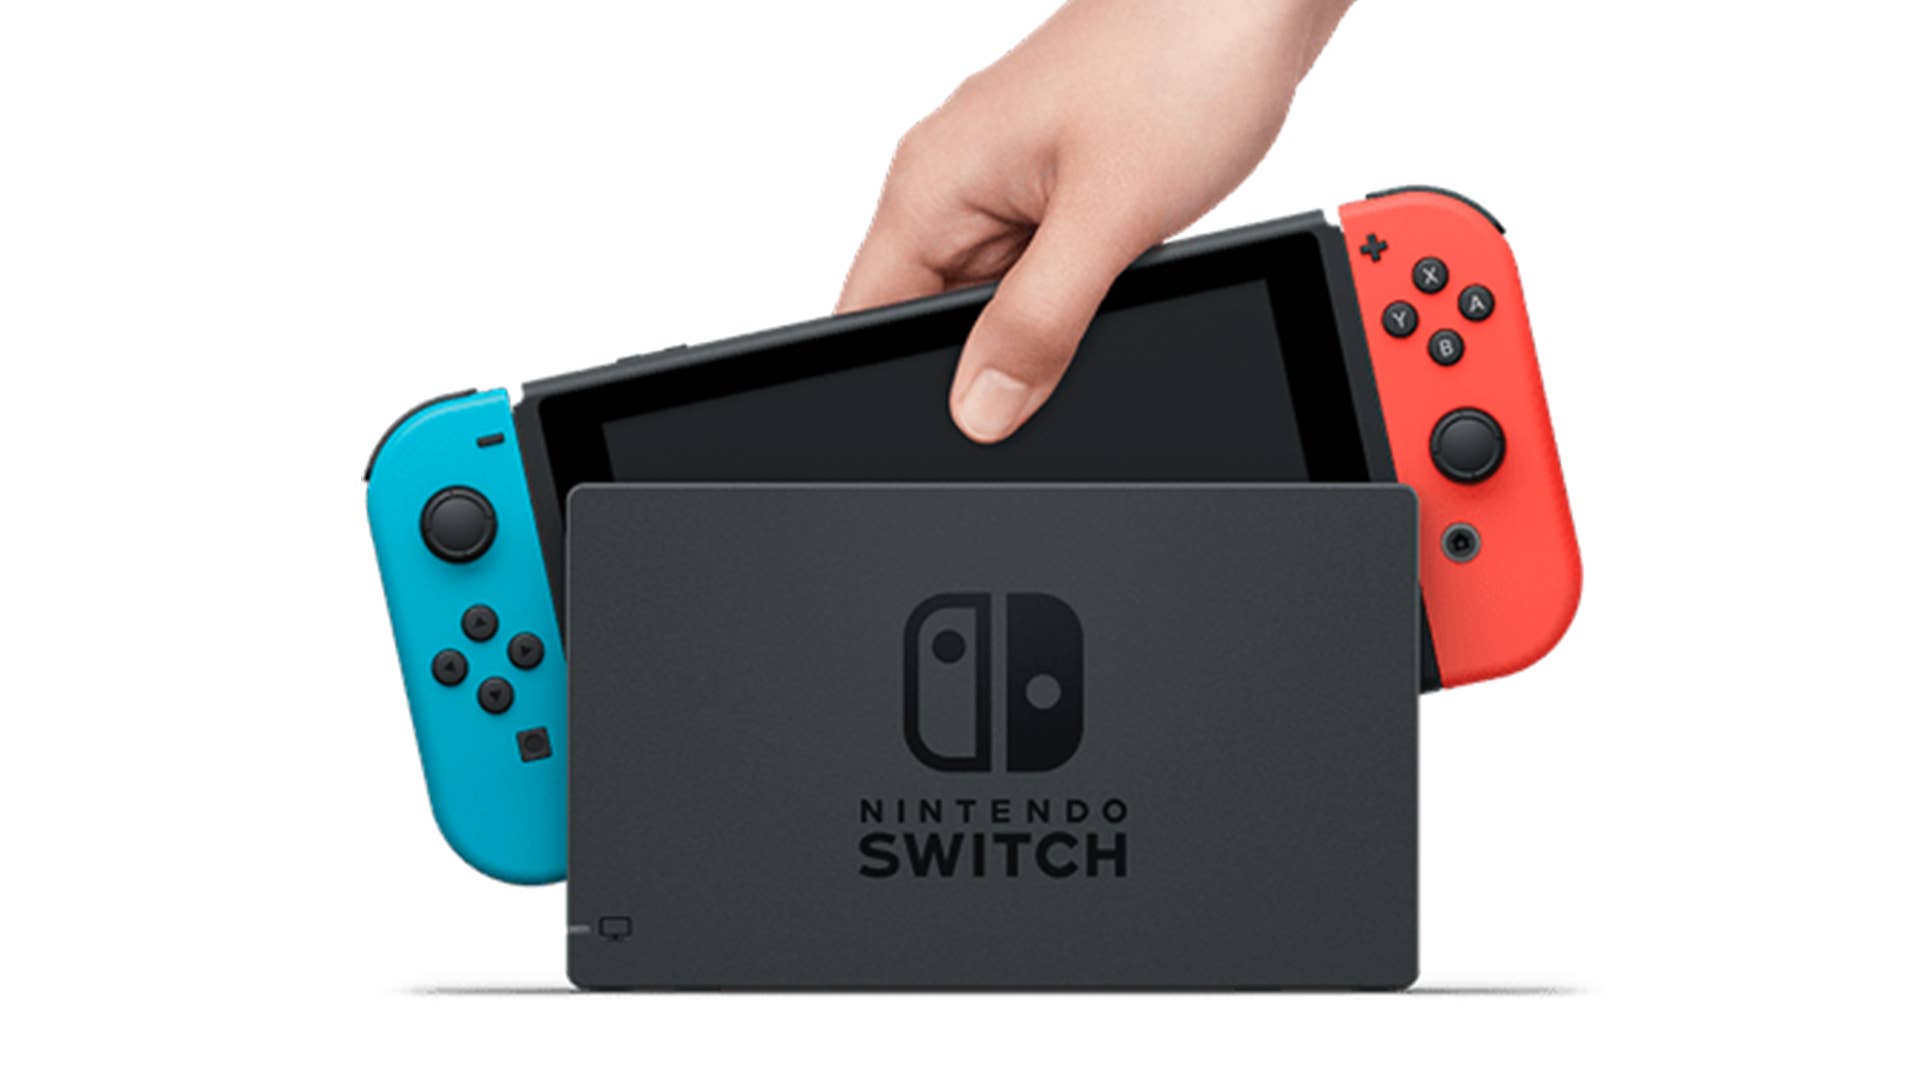 Nintendo, please STOP releasing Nintendo Switch Consoles 